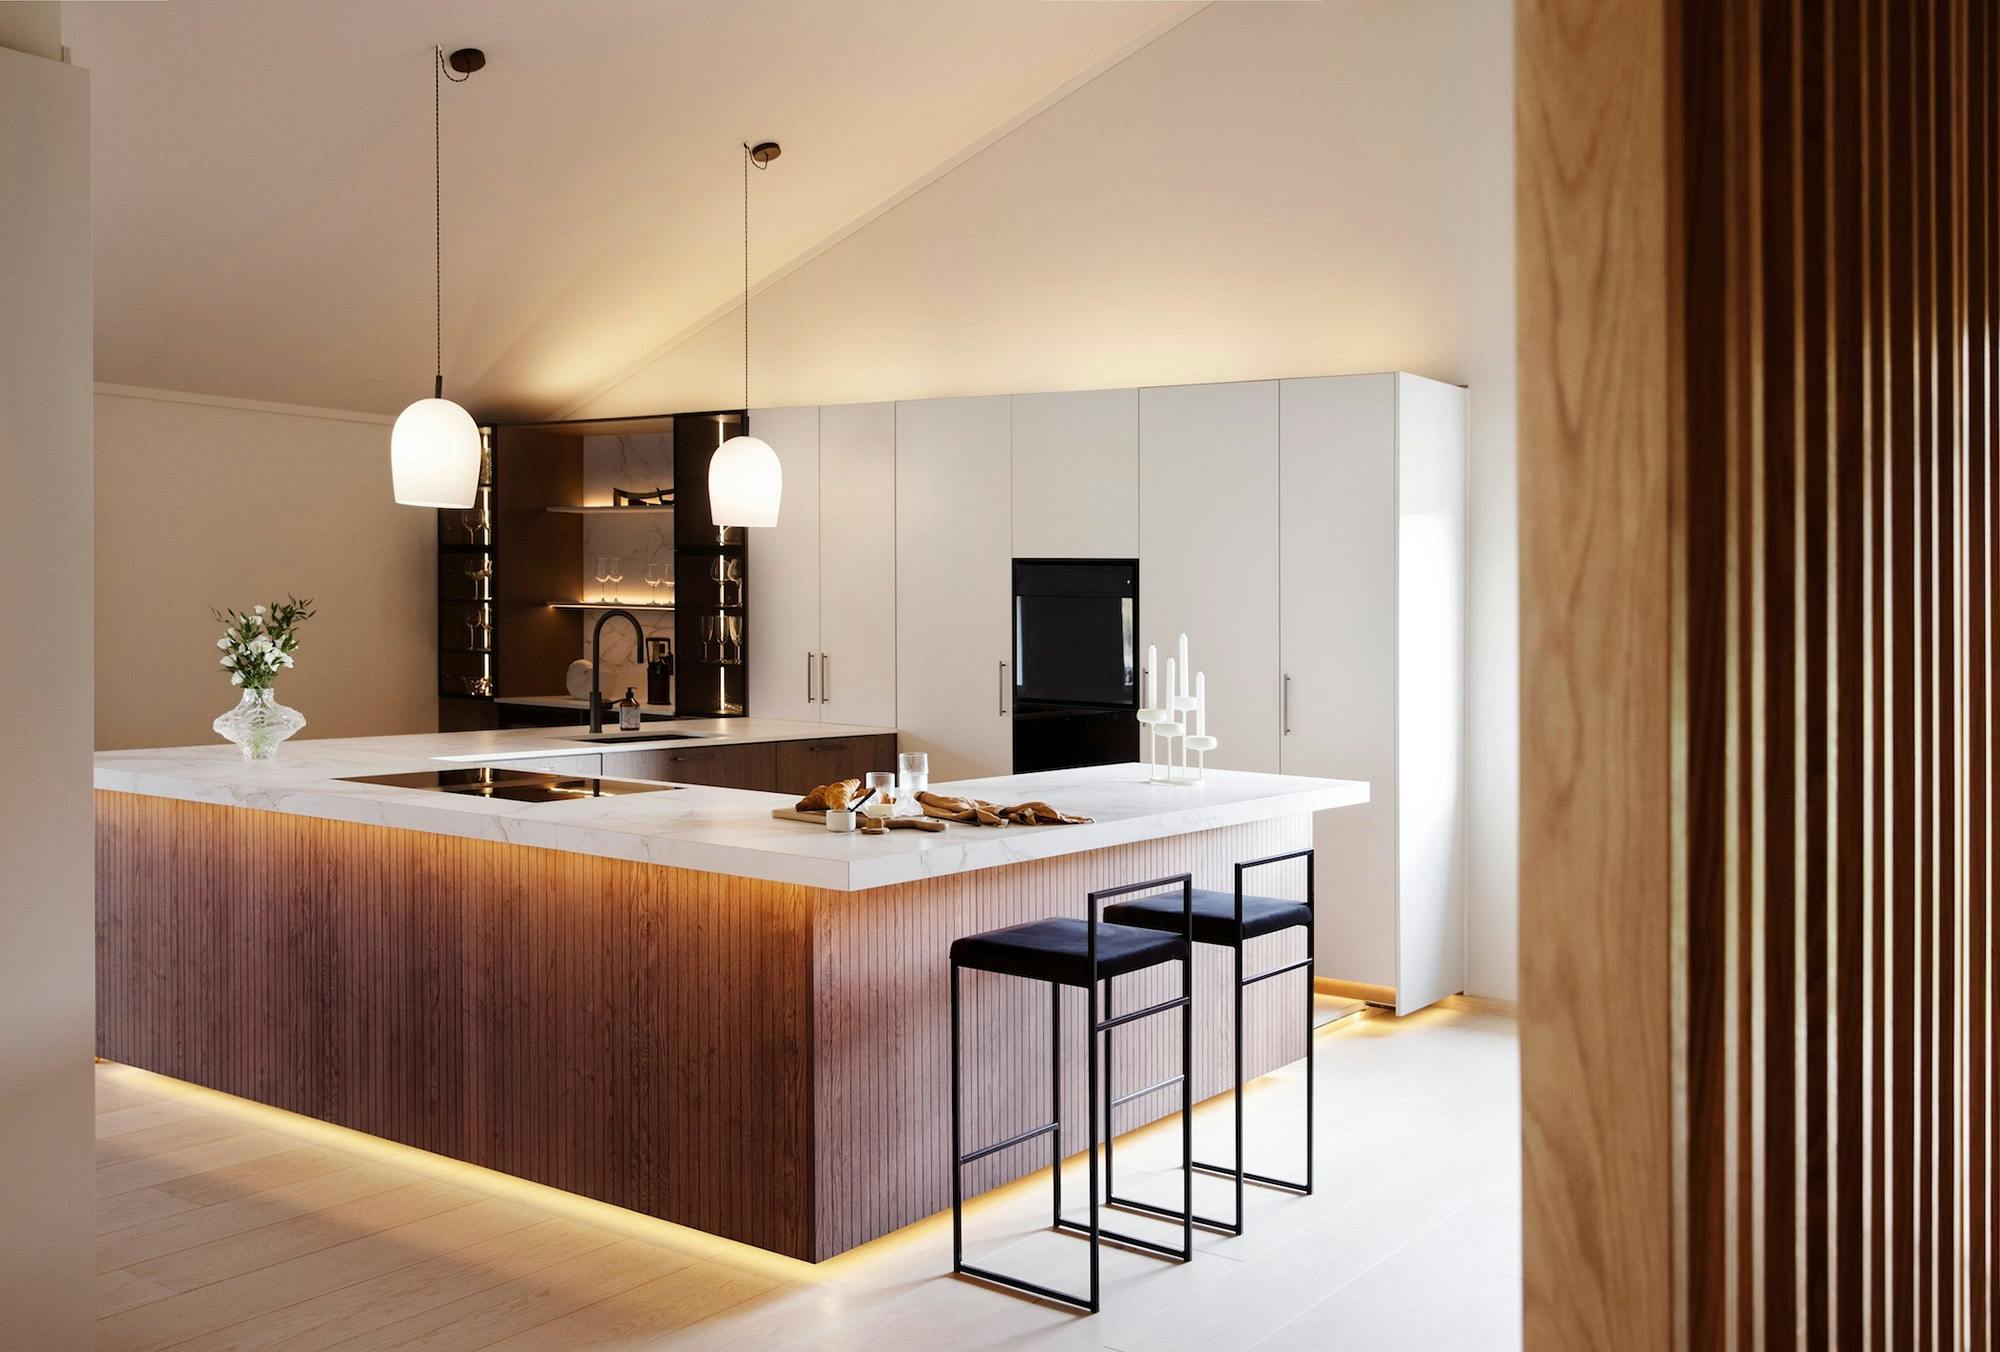 Imagem número 43 da actual secção de Dekton Arga creates an elegant atmosphere in this open plan kitchen with a minimalist approach da Cosentino Portugal